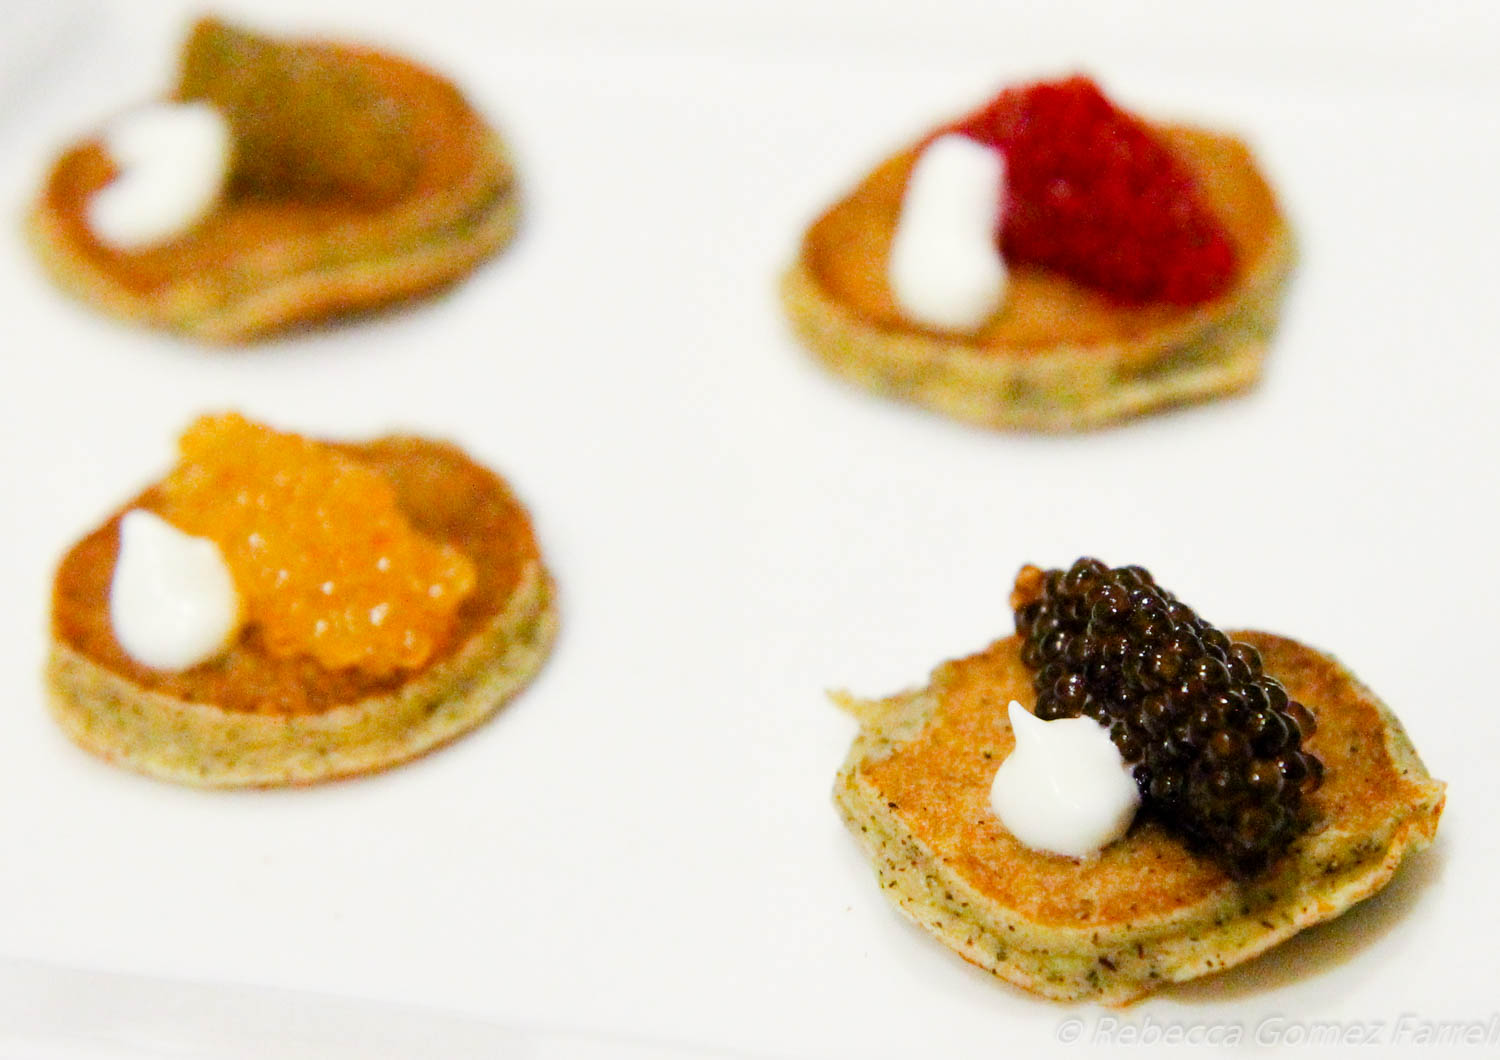 Caviar & Cabernet Sauvignon: Jordan Winery’s elegant pairing experiences